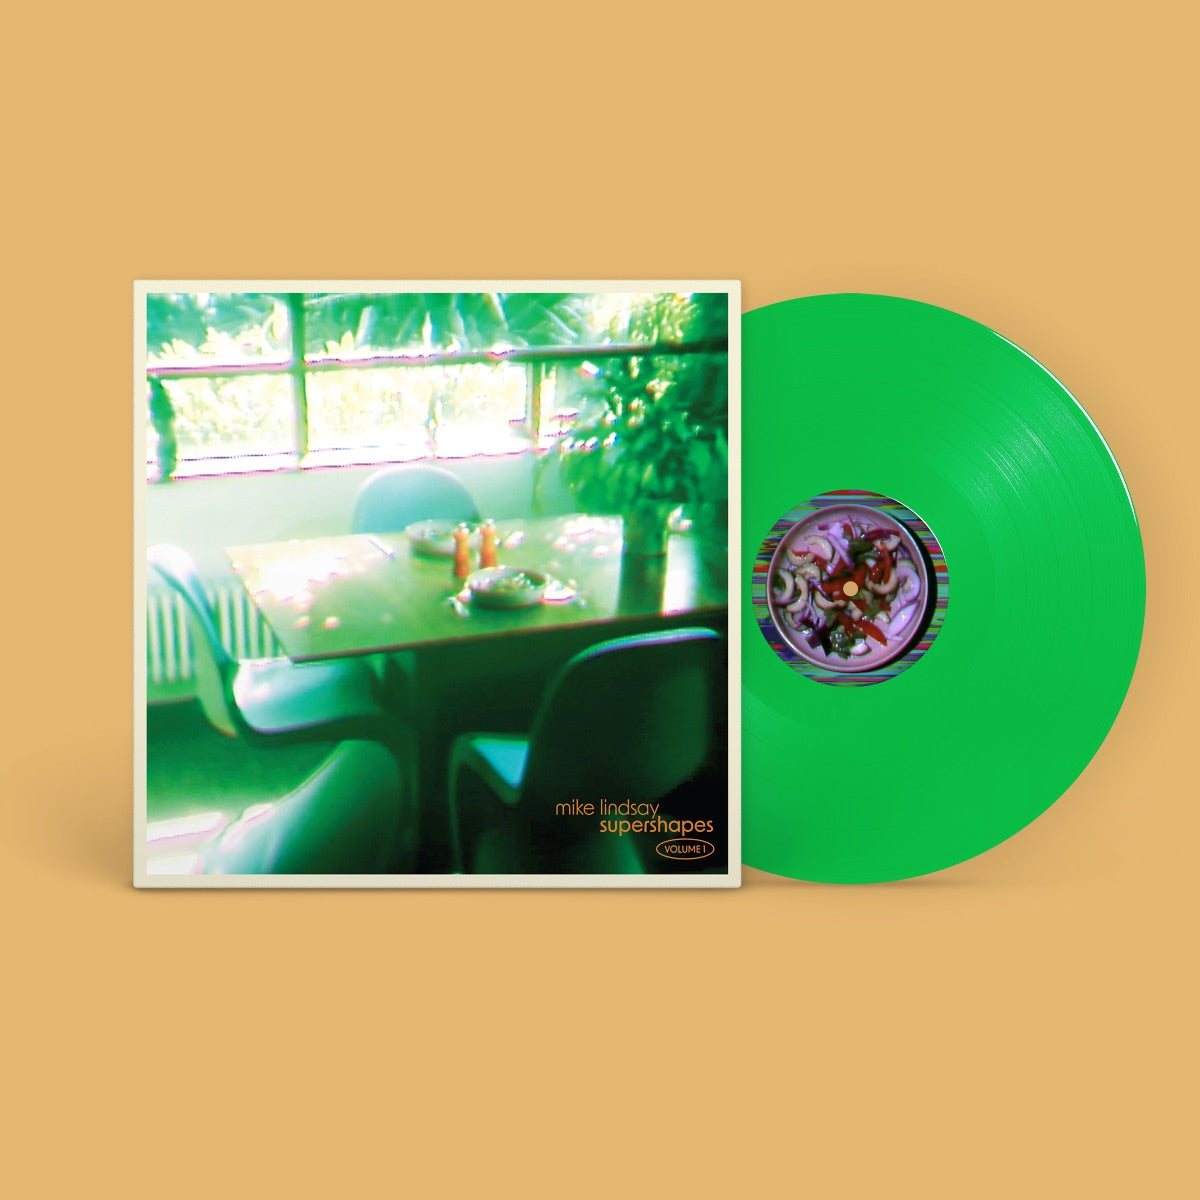 Mike Lindsay - Supershapes Vol 1: 'Cucumber' Green Vinyl LP